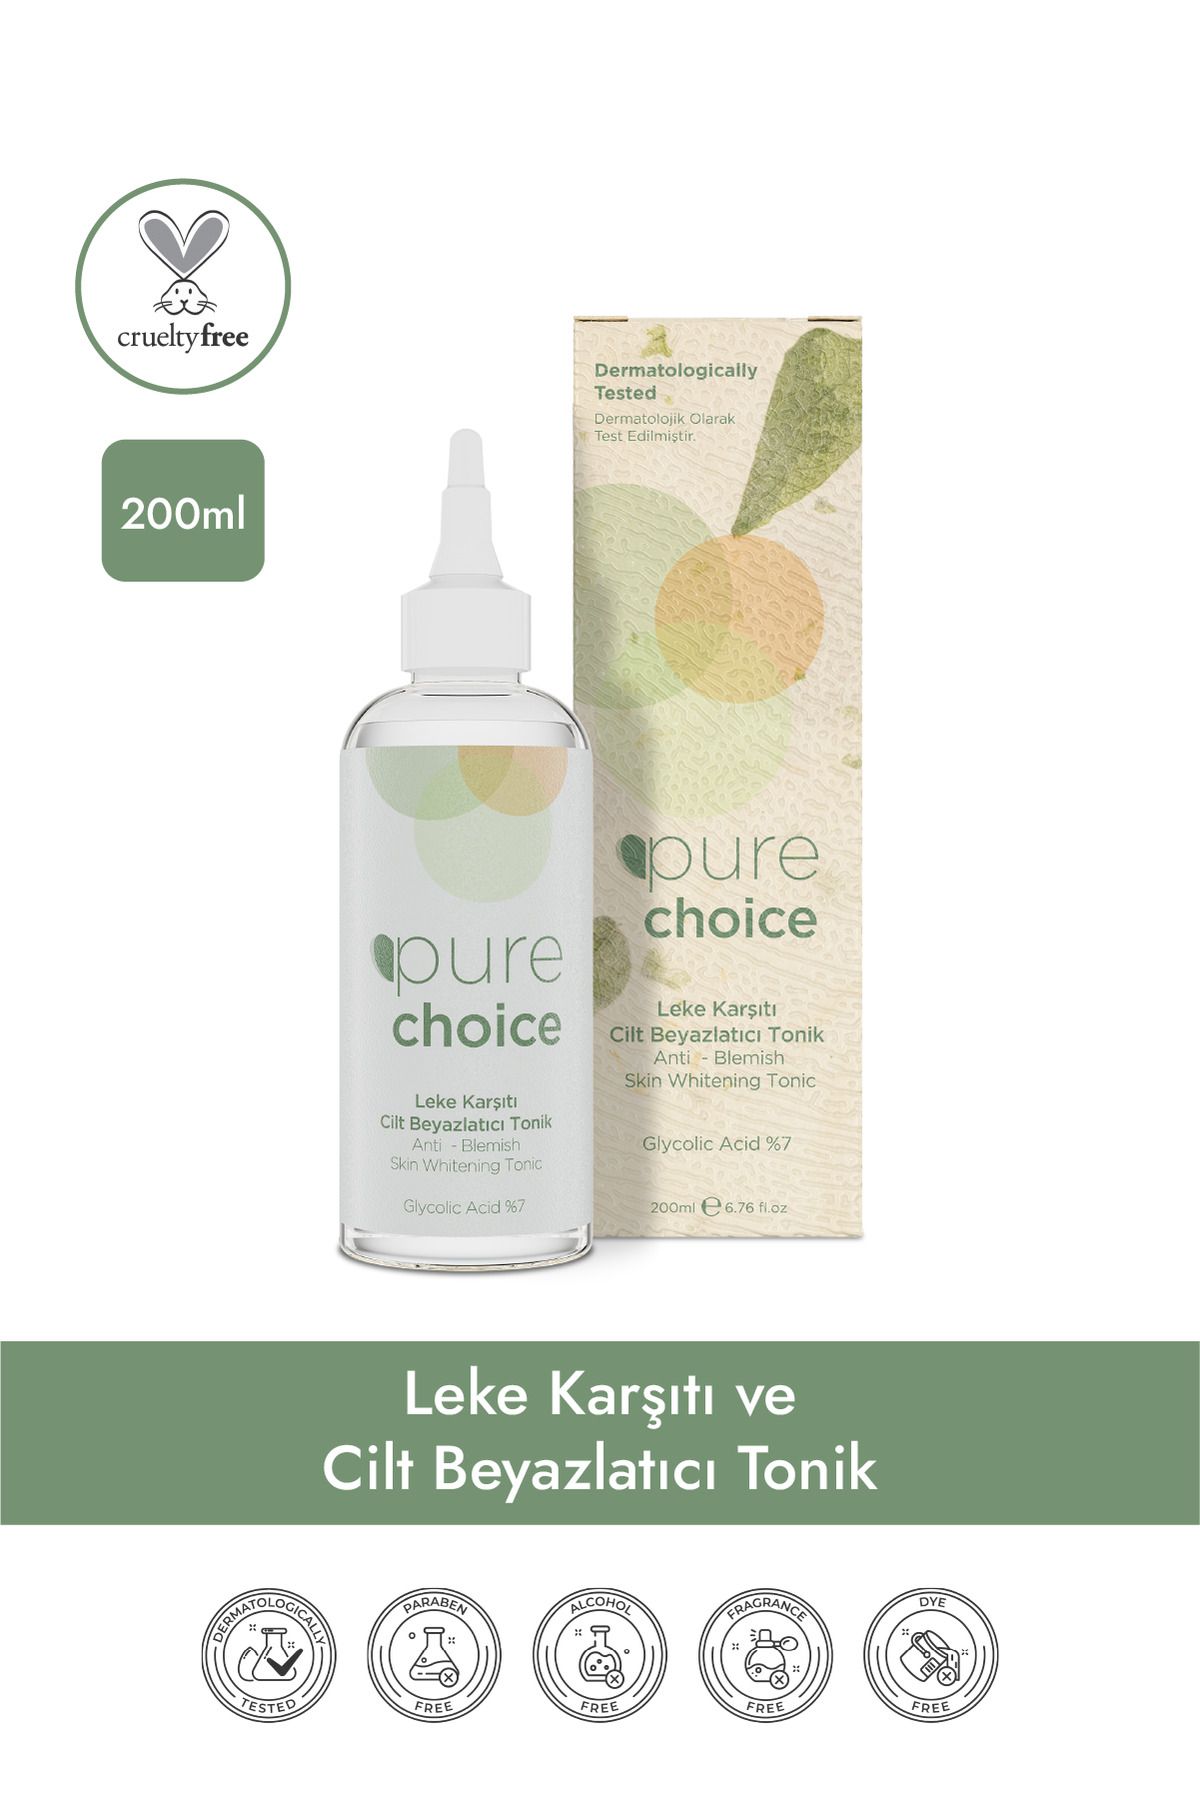 Pure Choice Leke Karşıtı Cilt Beyazlatıcı Tonik 200ml Glycolic Acid %7)